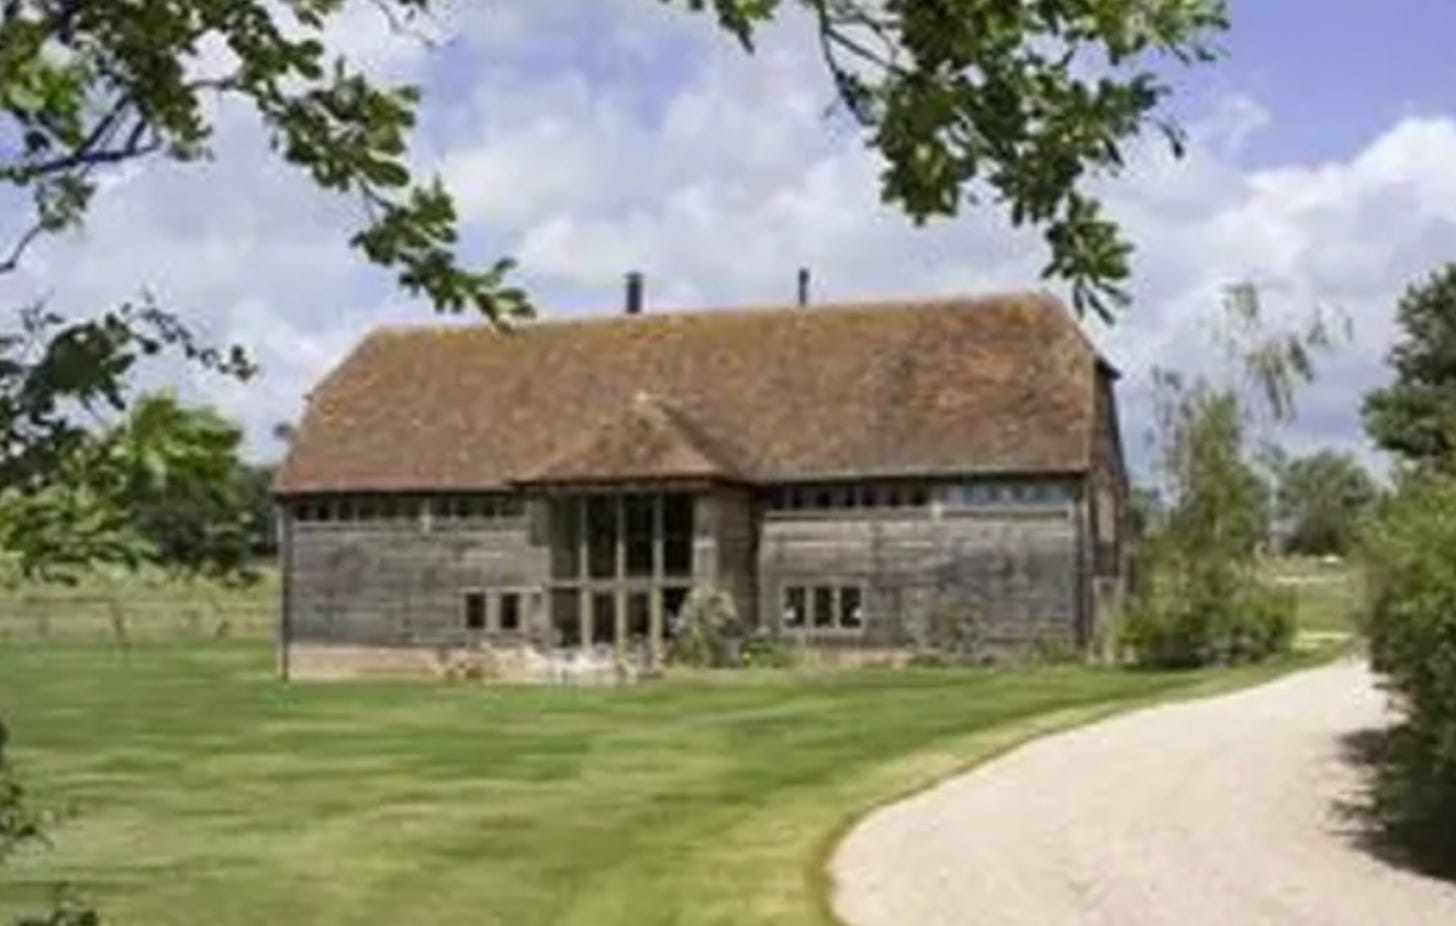 Elizabethan historic barn in a grassy field